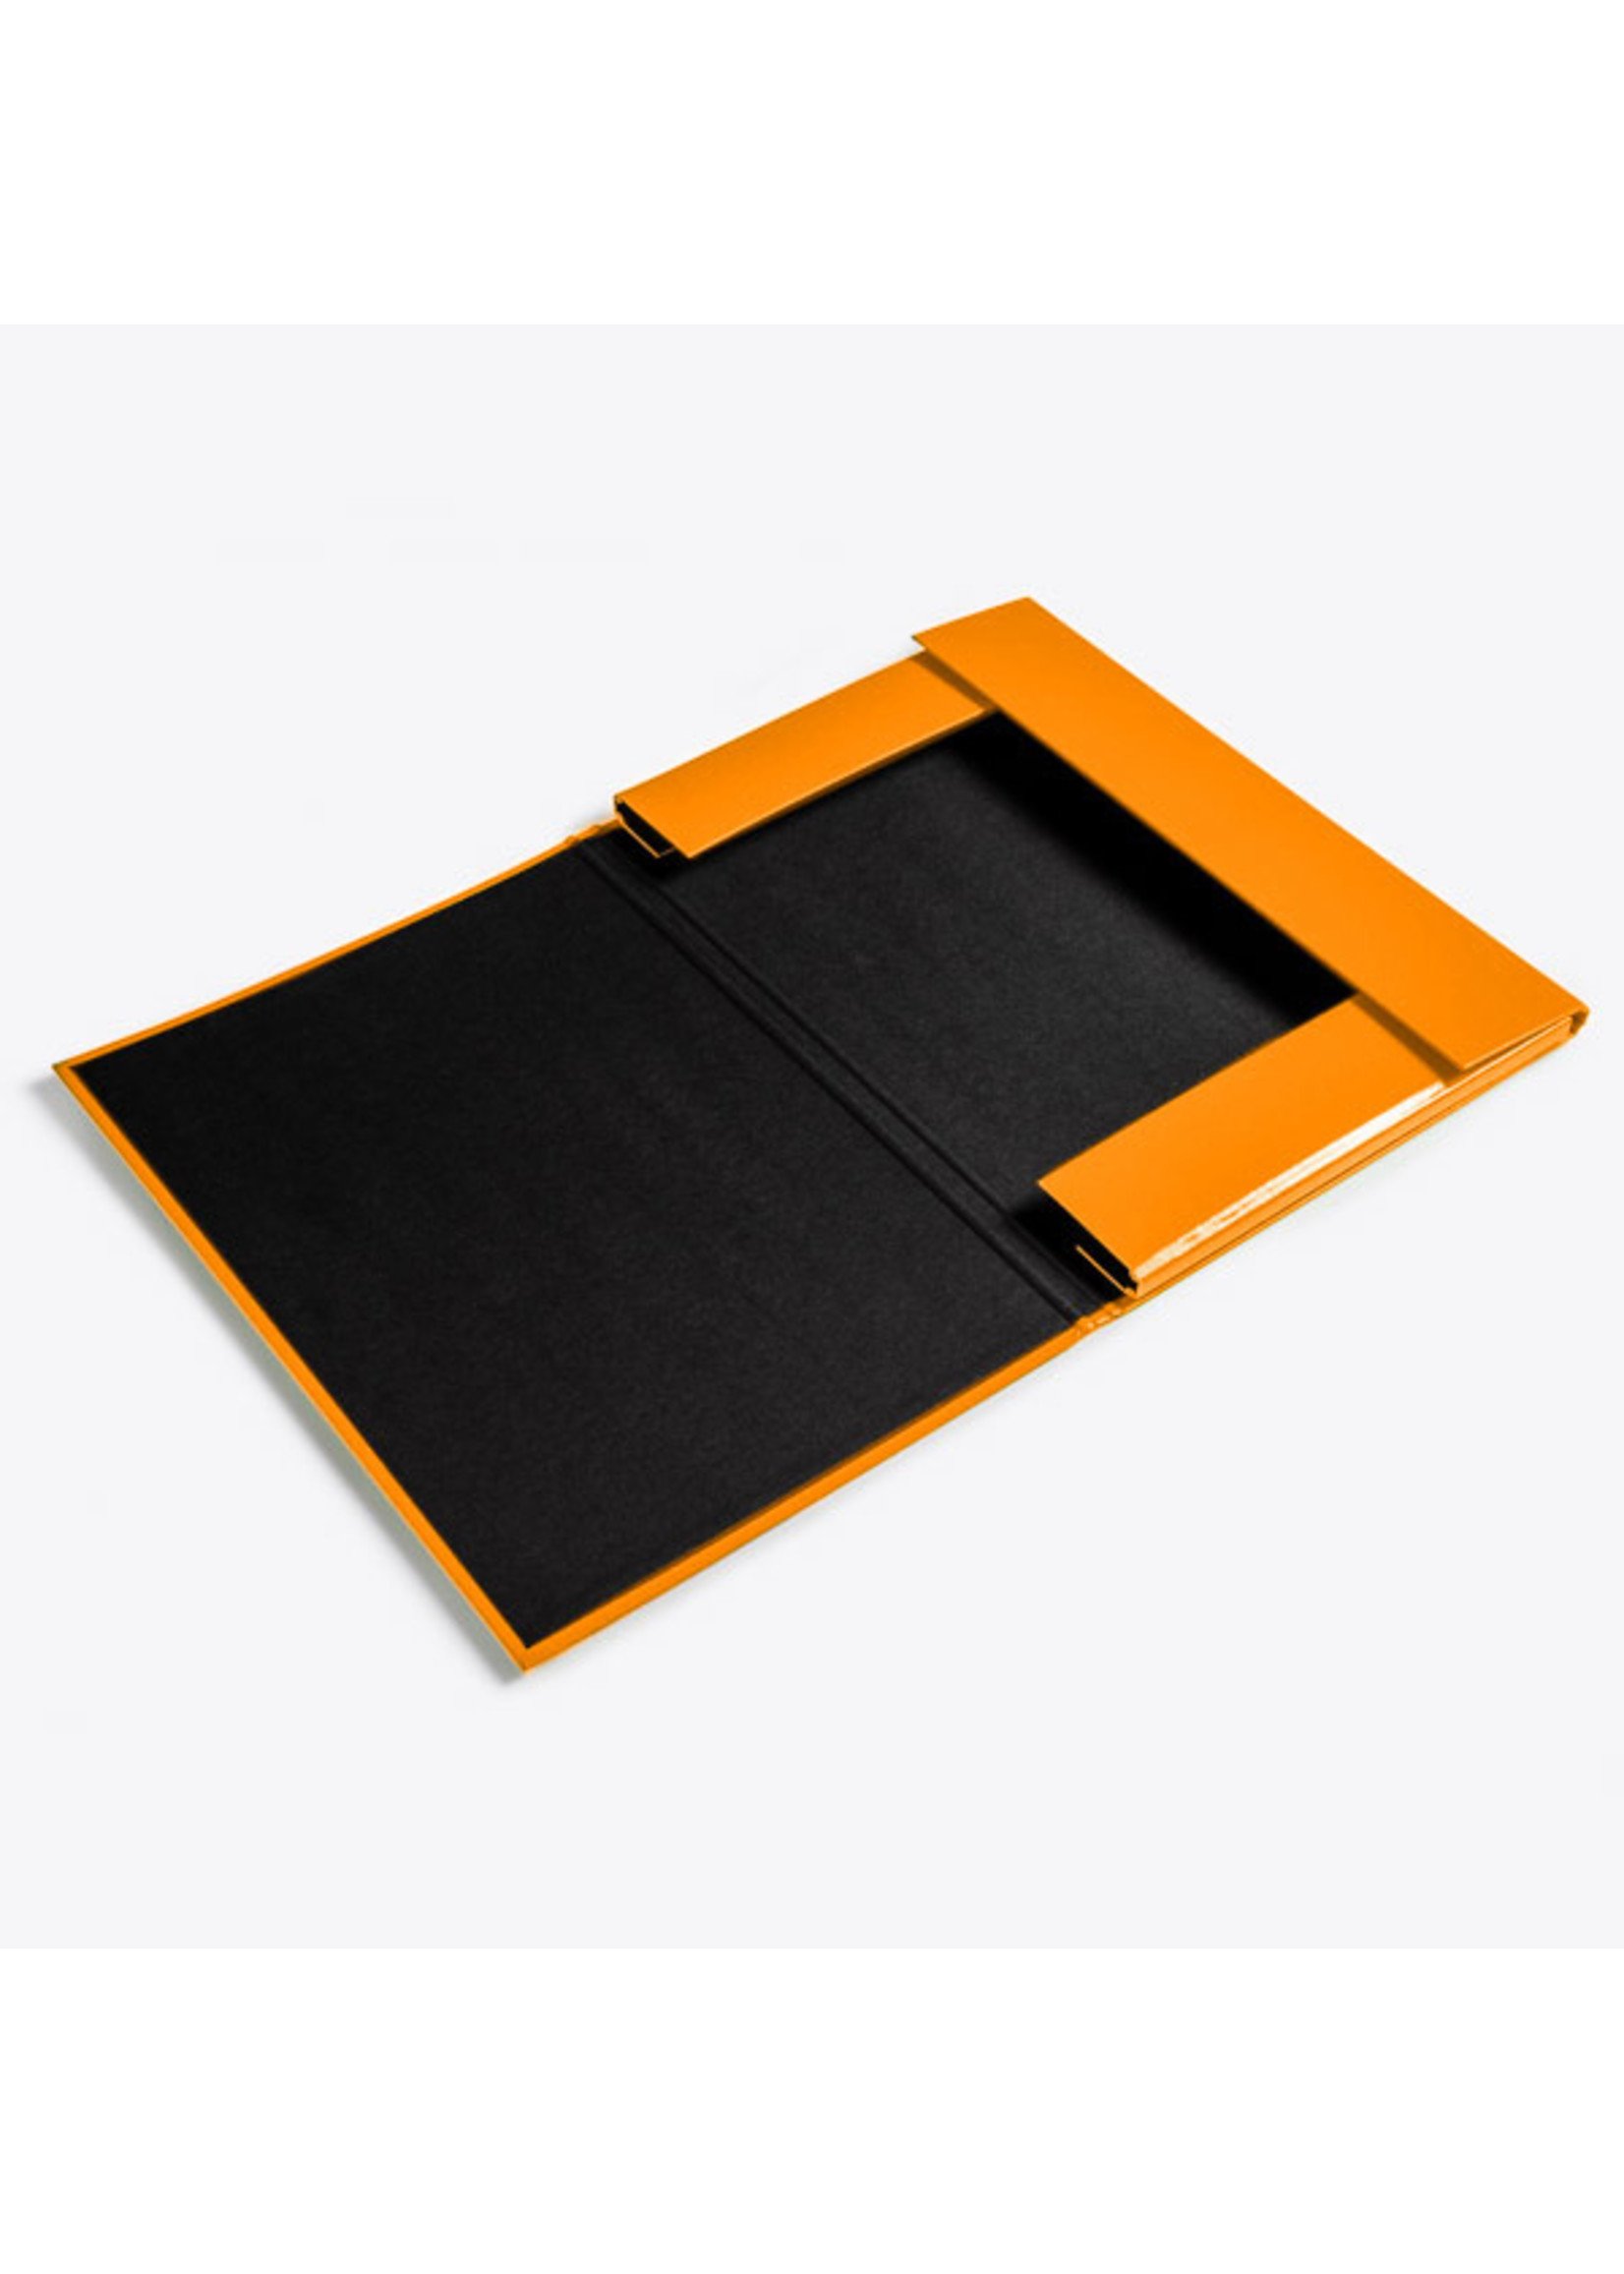 Folder Orange